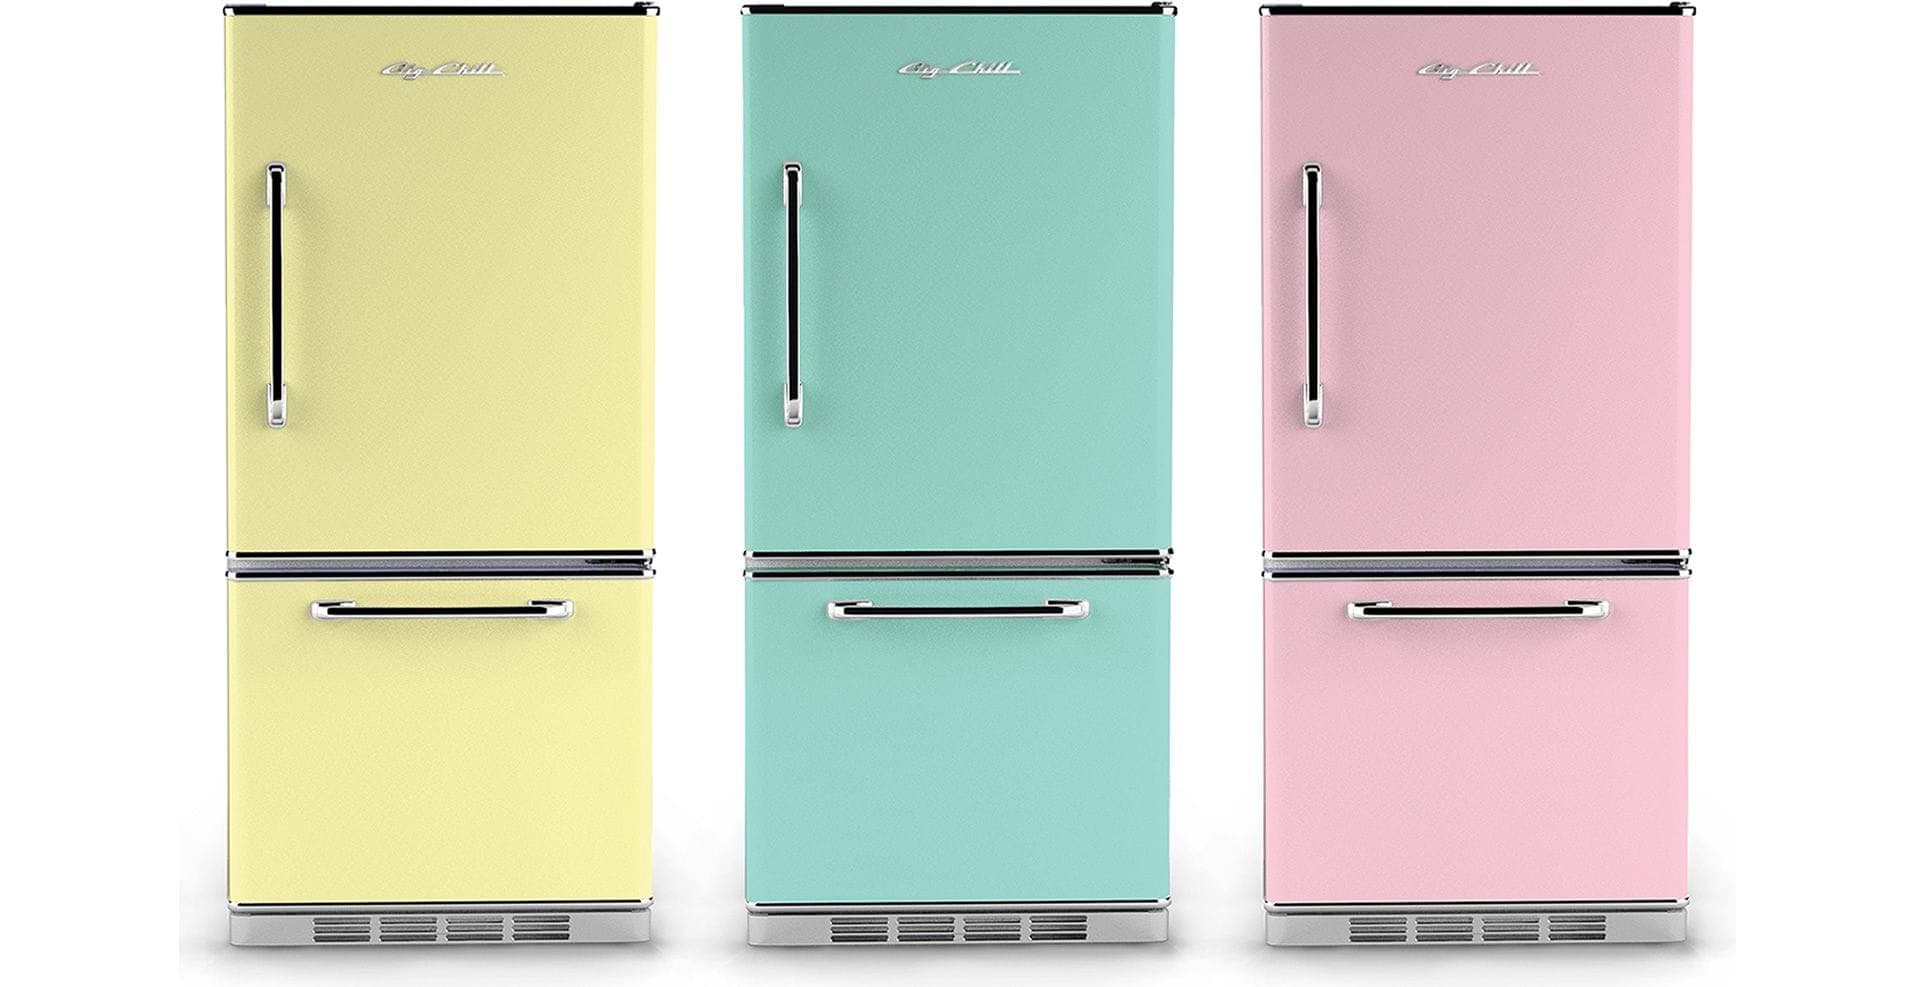 Big Chill Retropolitain Refrigerators